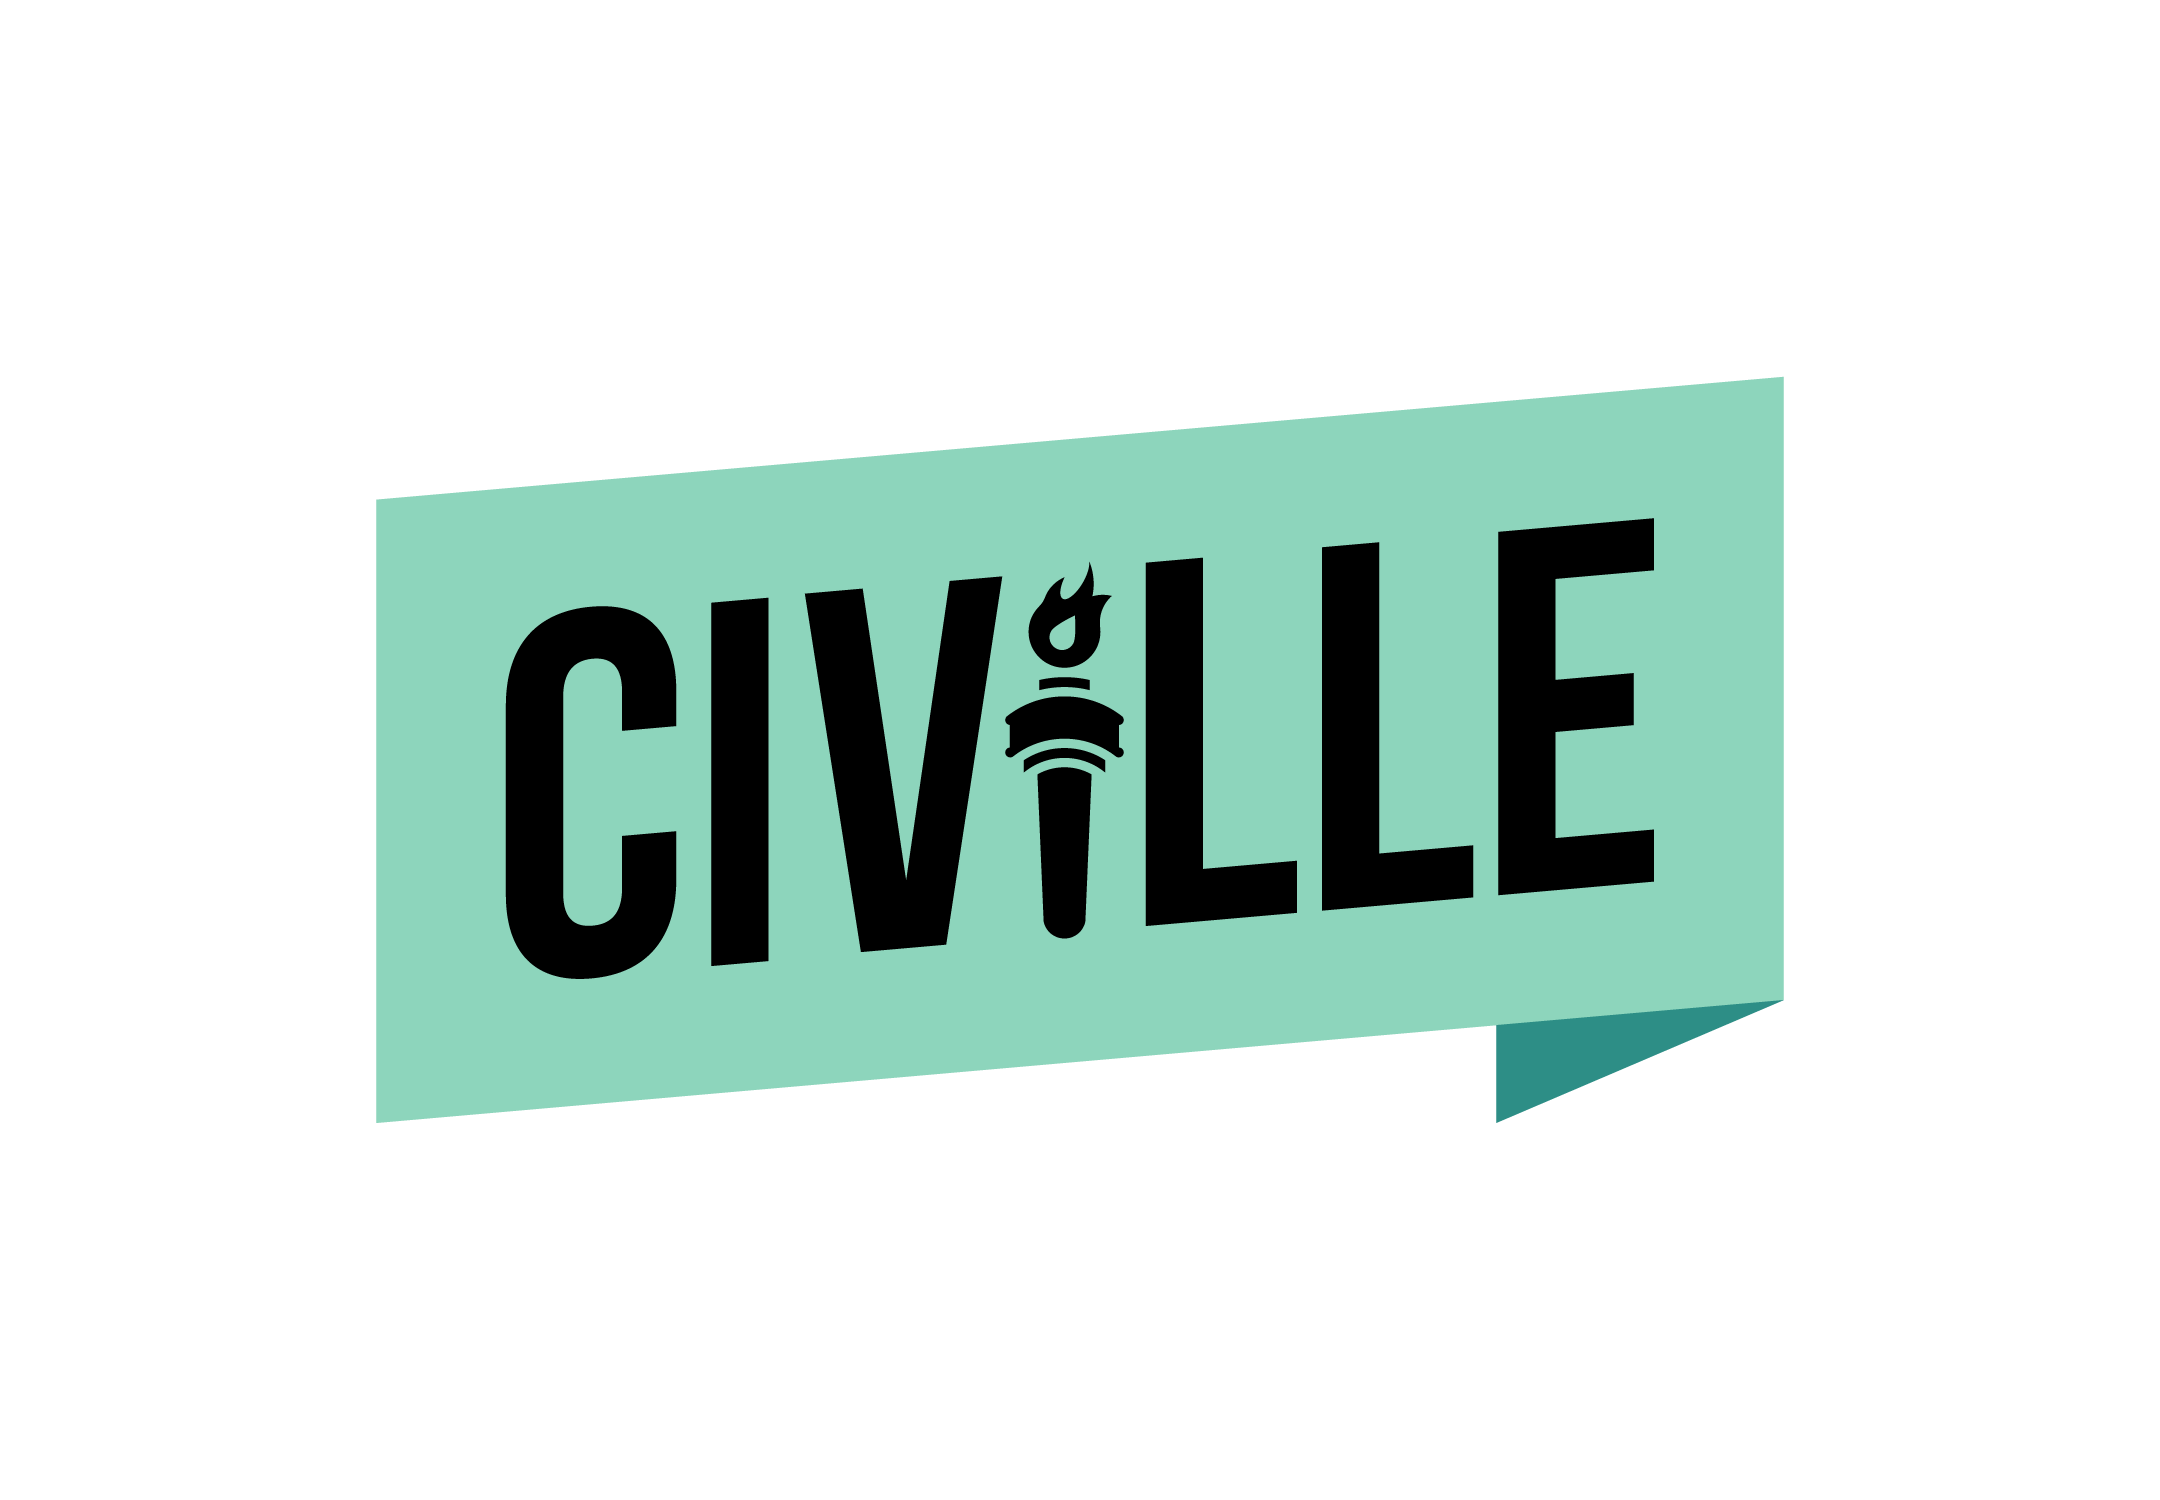 Civille logo